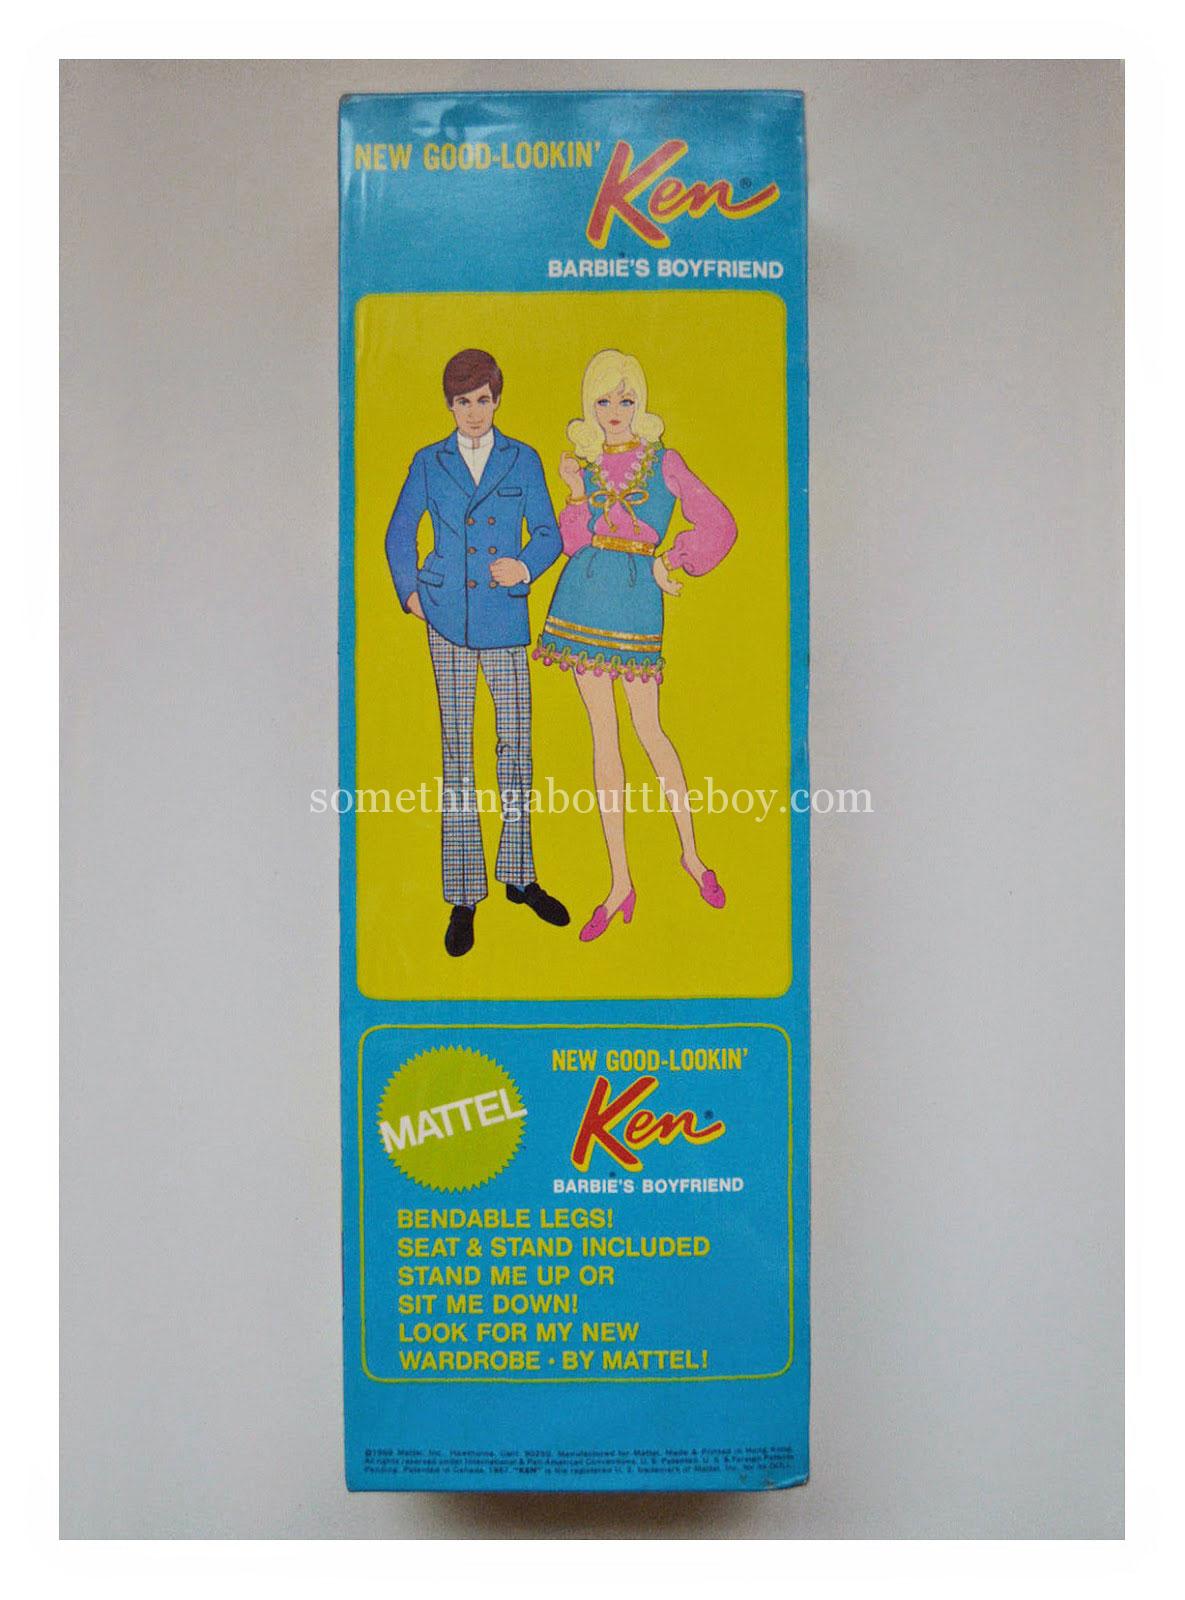 1971 #1124 New Good-Lookin' Ken in original packaging